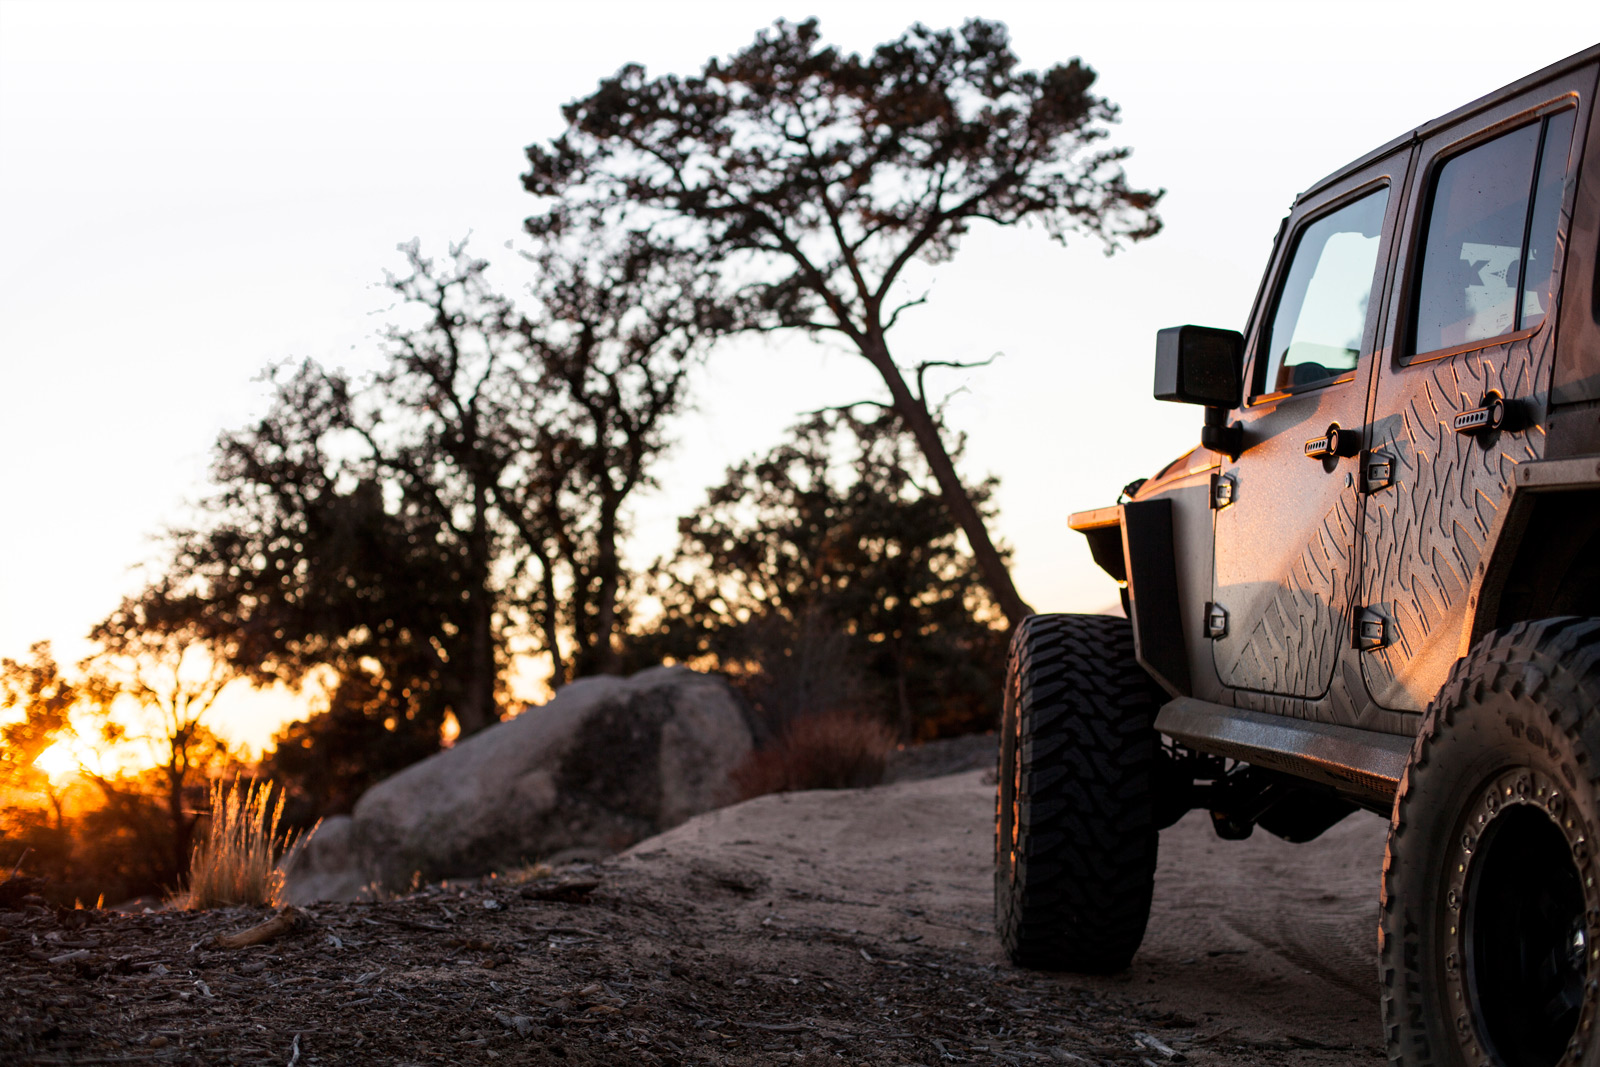 Jeep Sunset